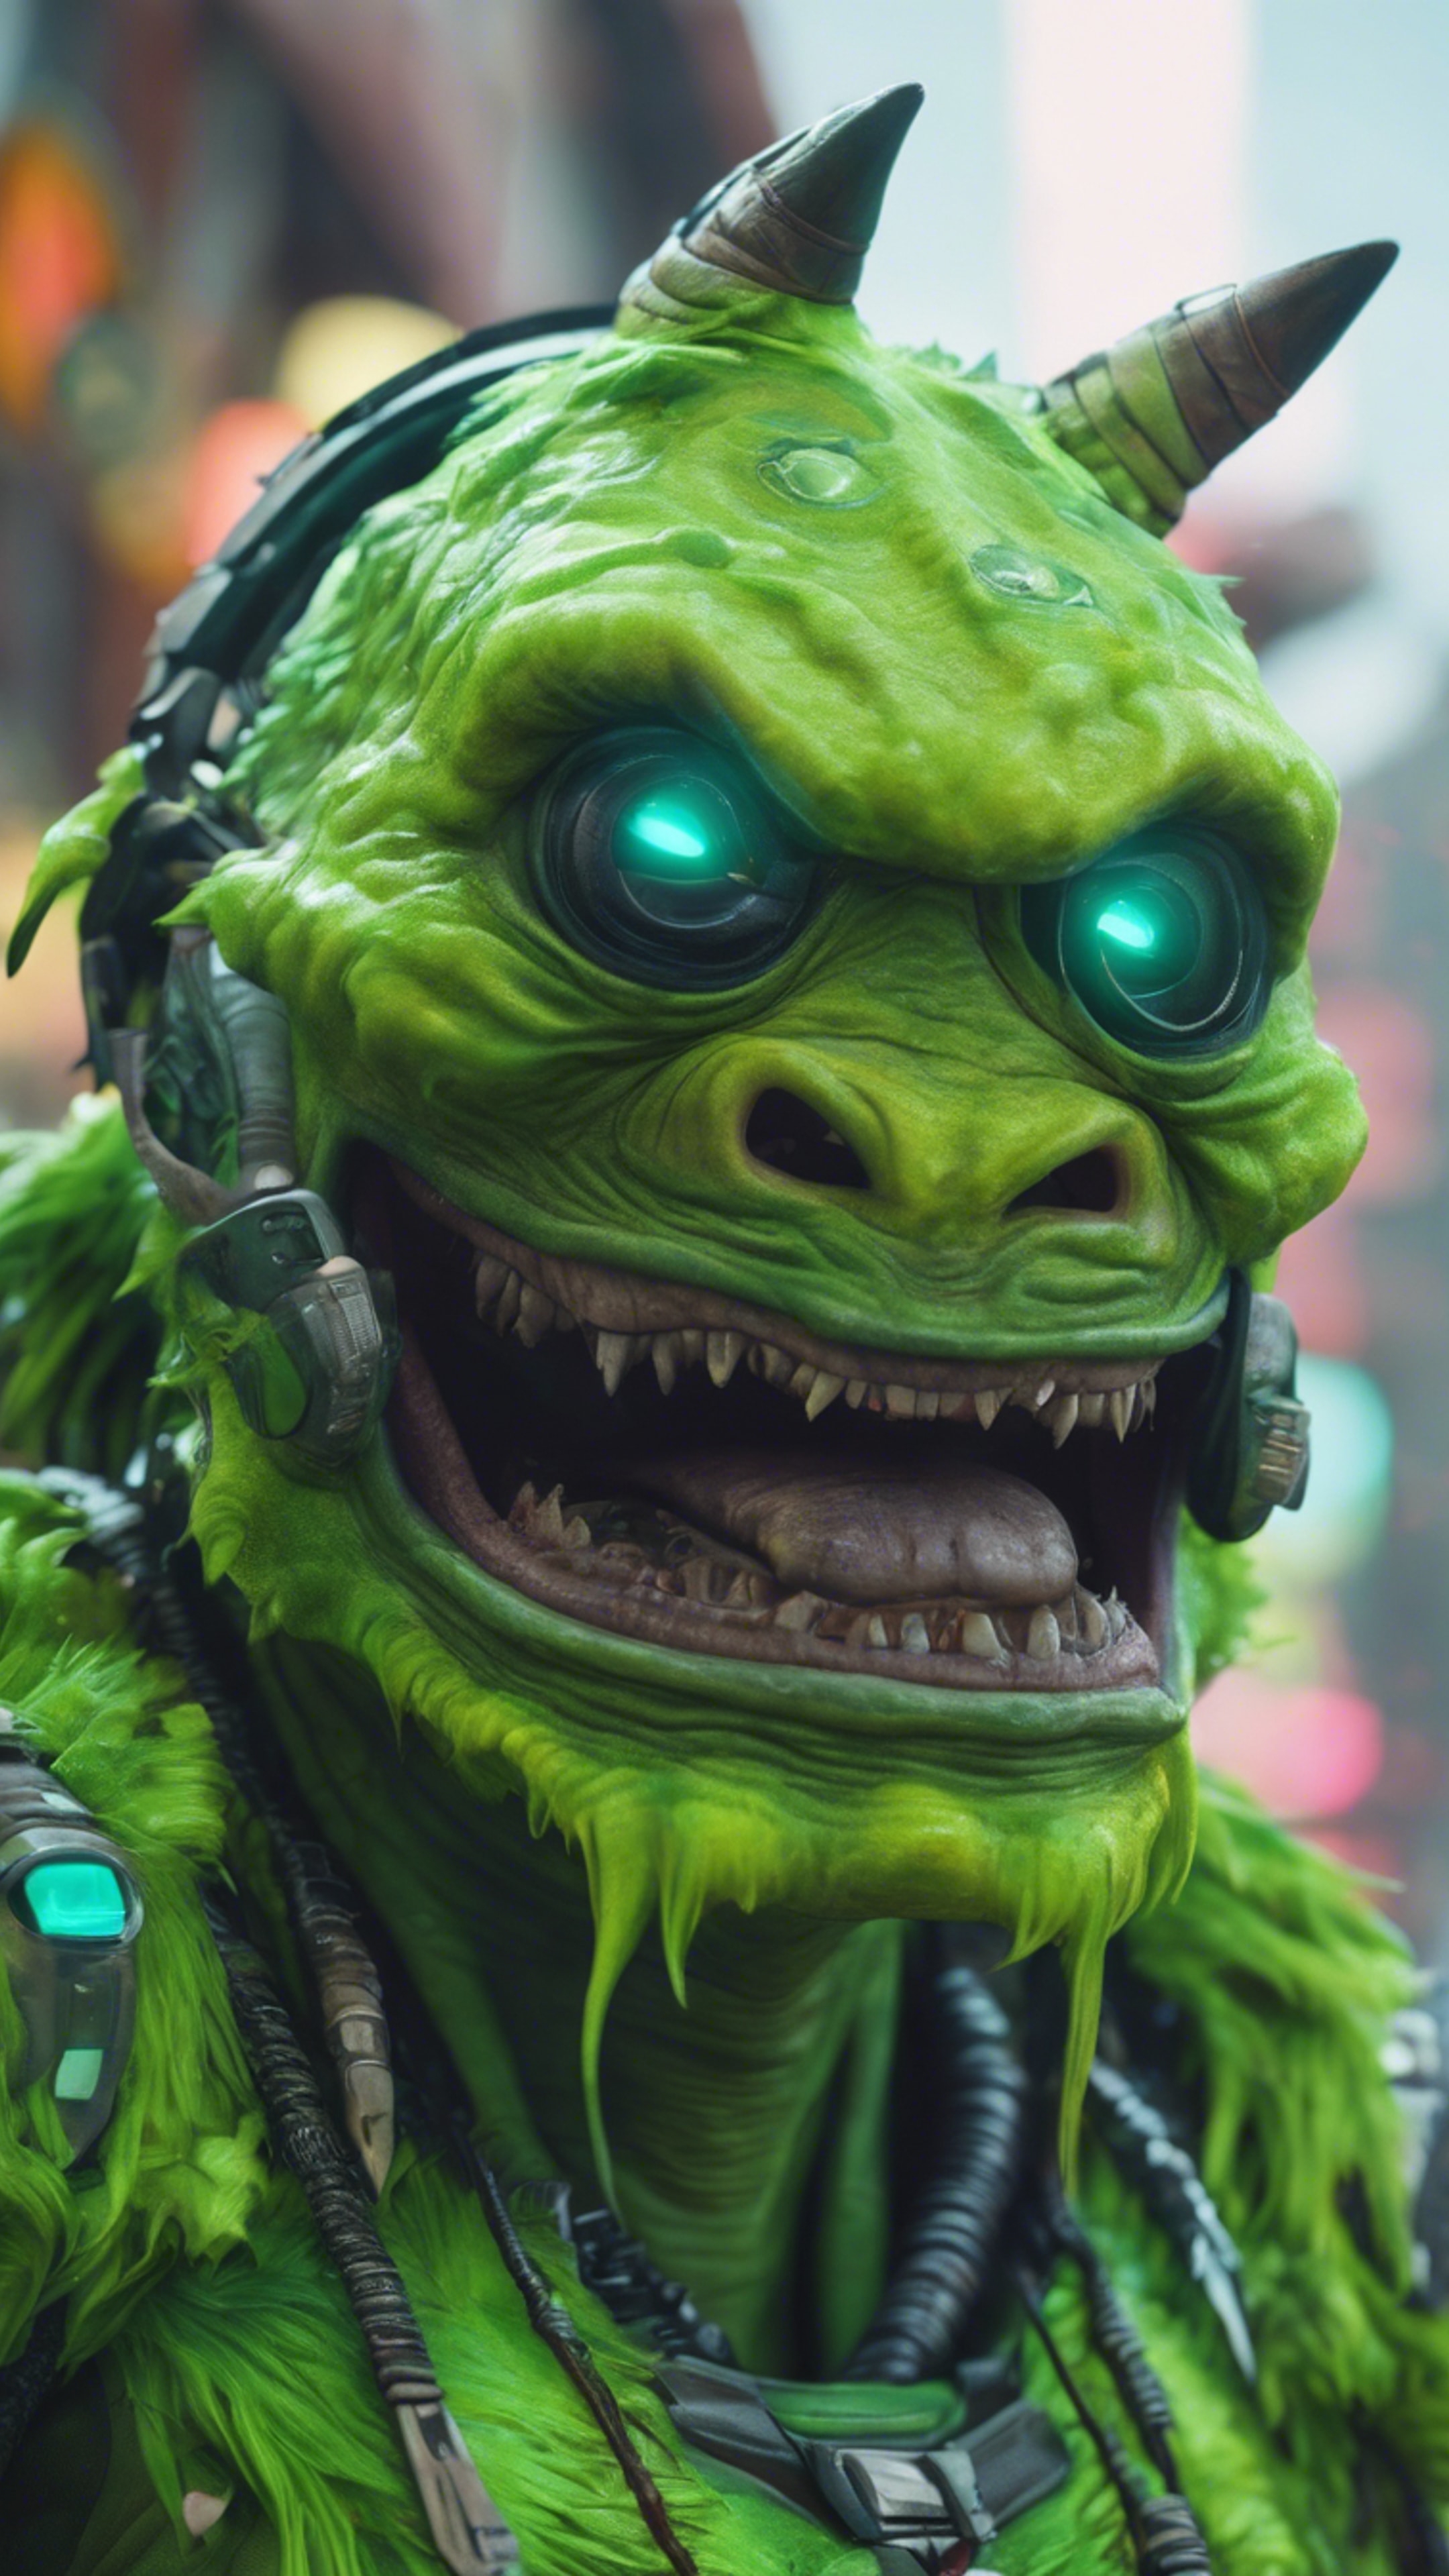 A neon green monster avatar in a popular video game Tapéta[af5fbbdb1ec04a35bd90]